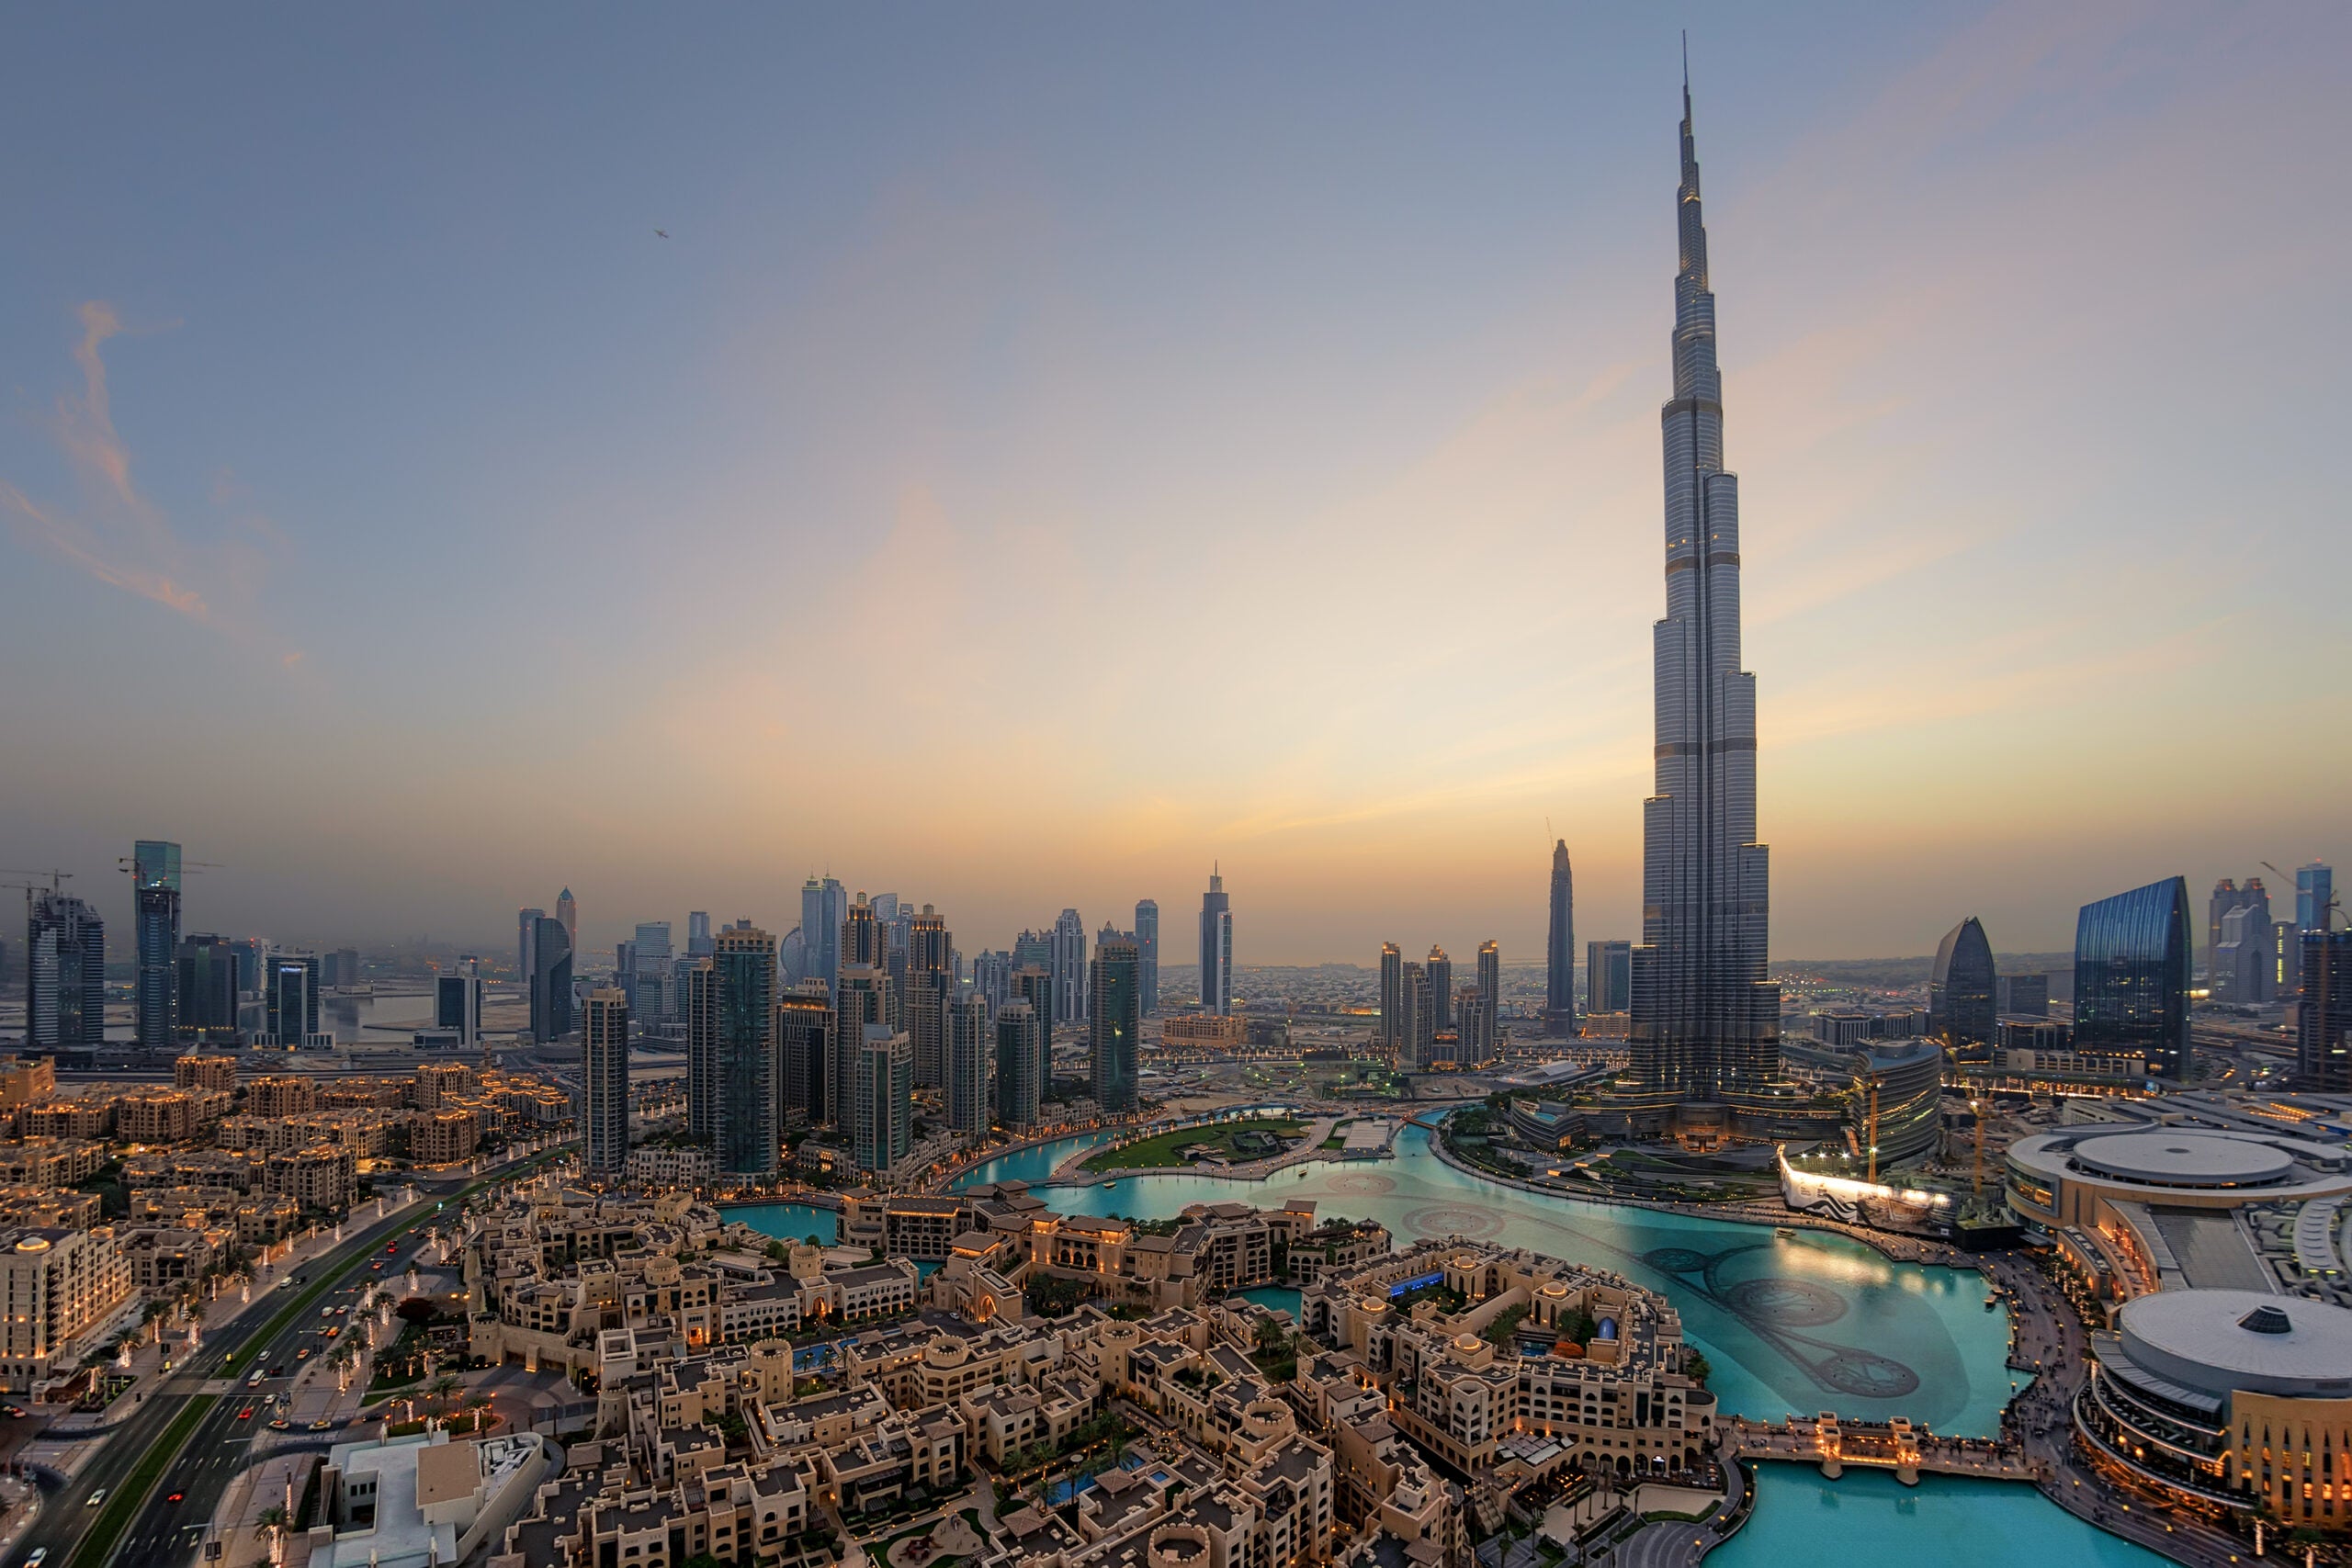 A city skyline in Dubai, United Arab Emirates.